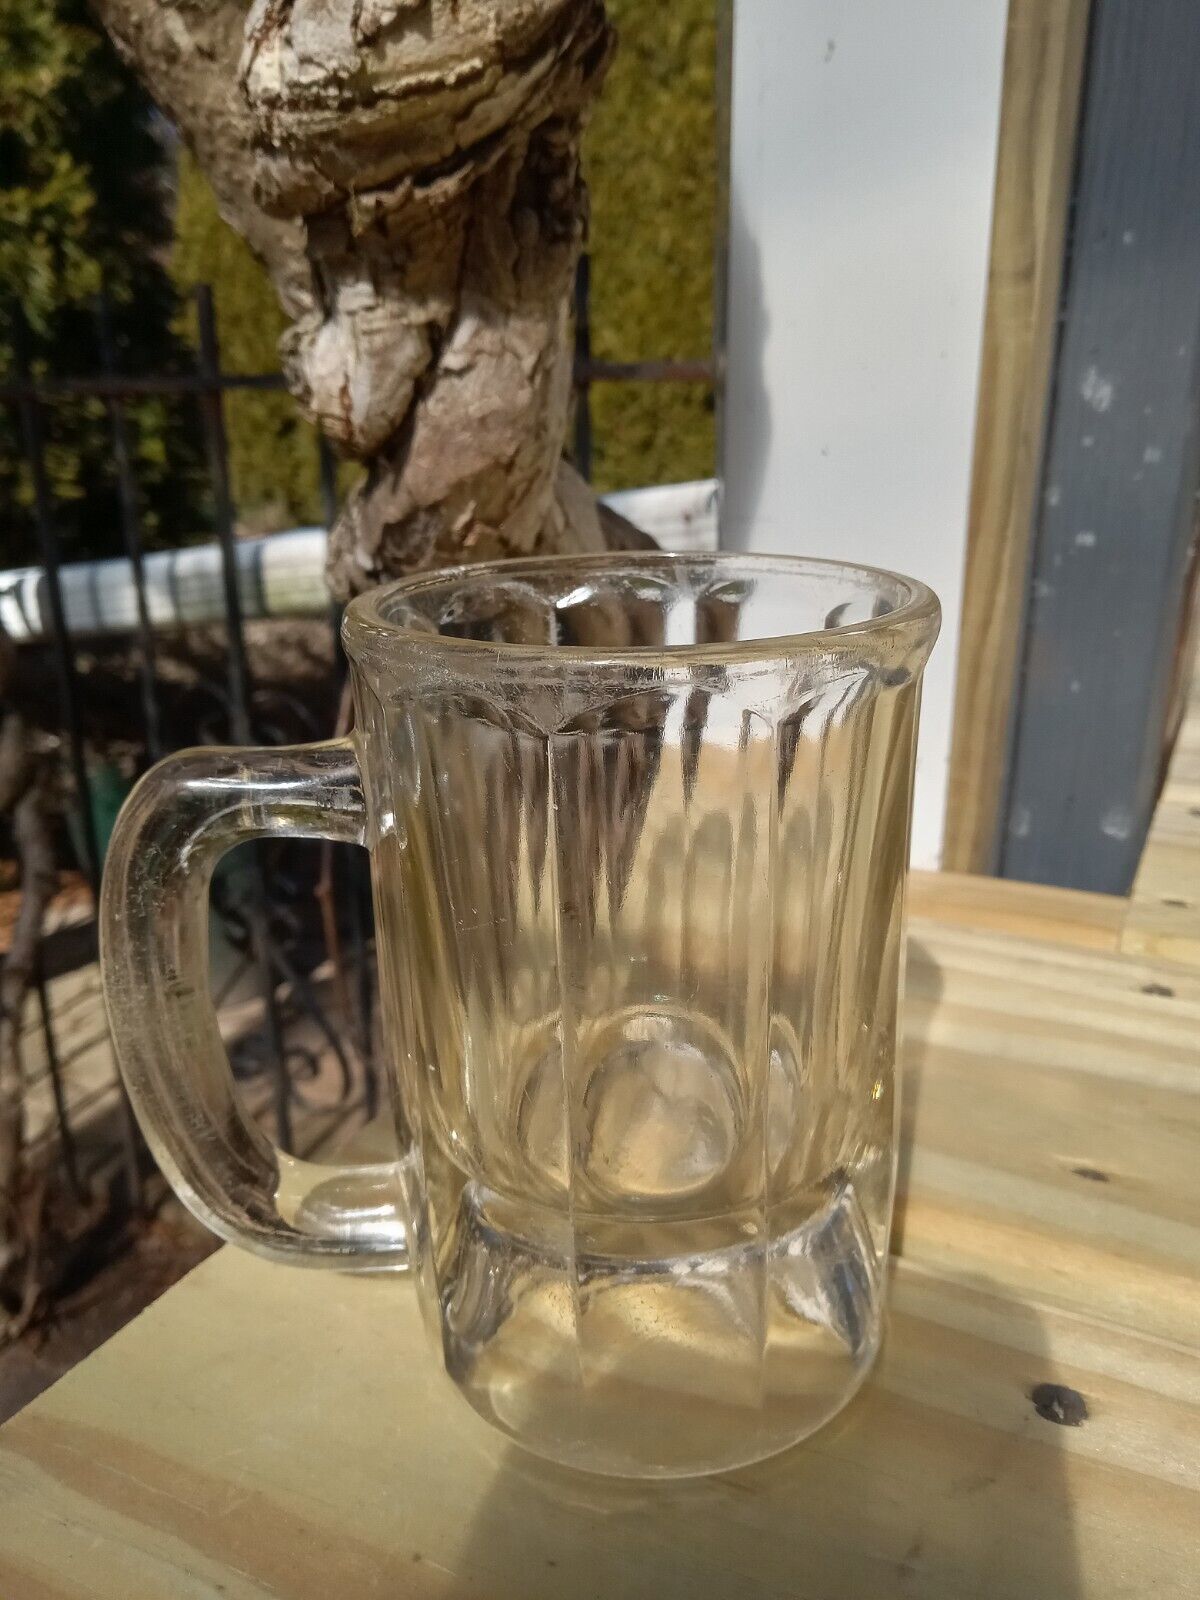 Antique Saloon Mug Base Beer Glass / Mug from 1890-1900